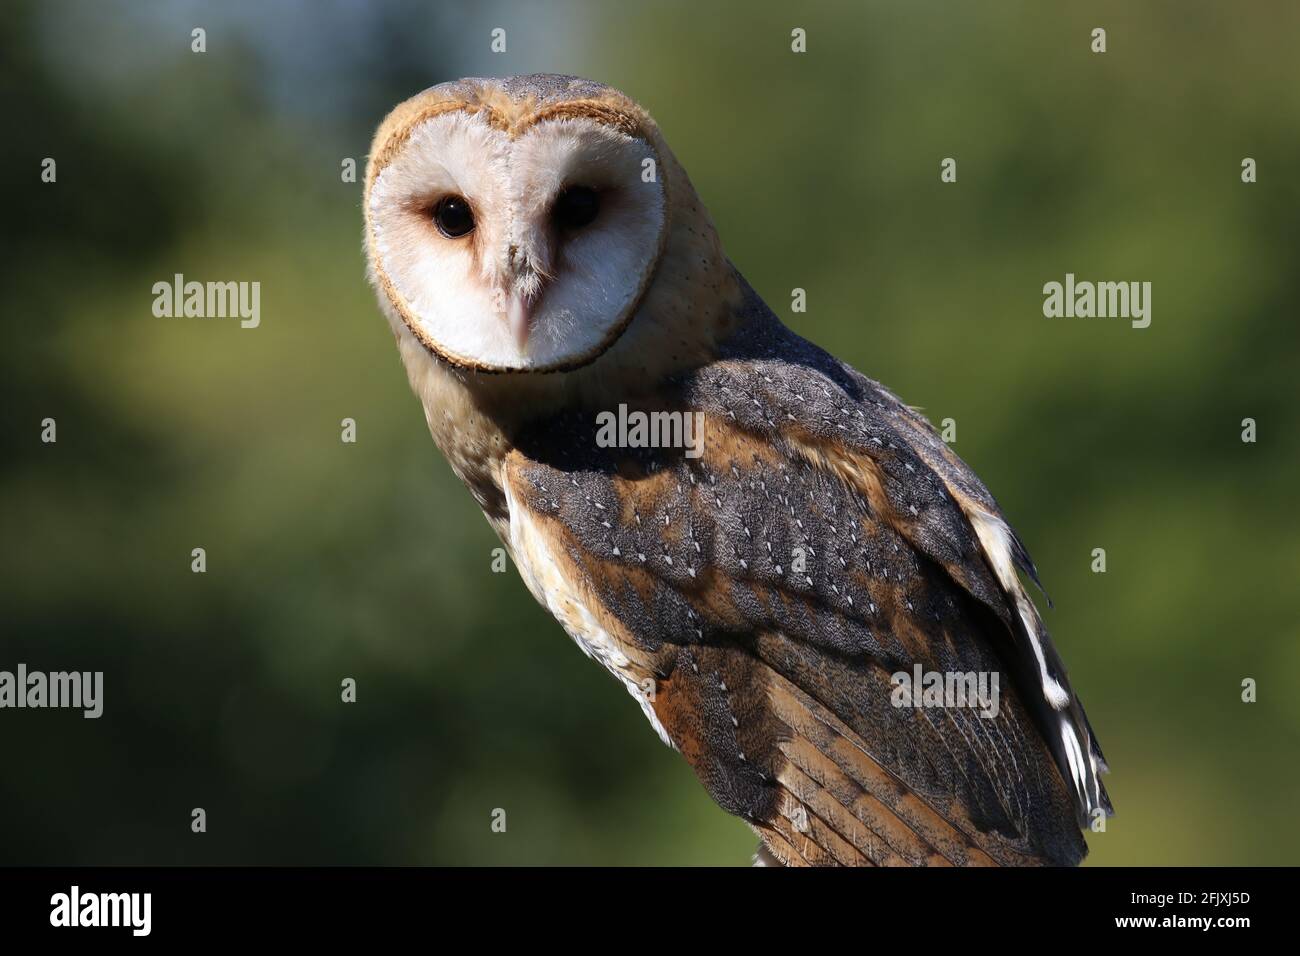 Barn owl raptor looking at camera against dark green background Stock Photo